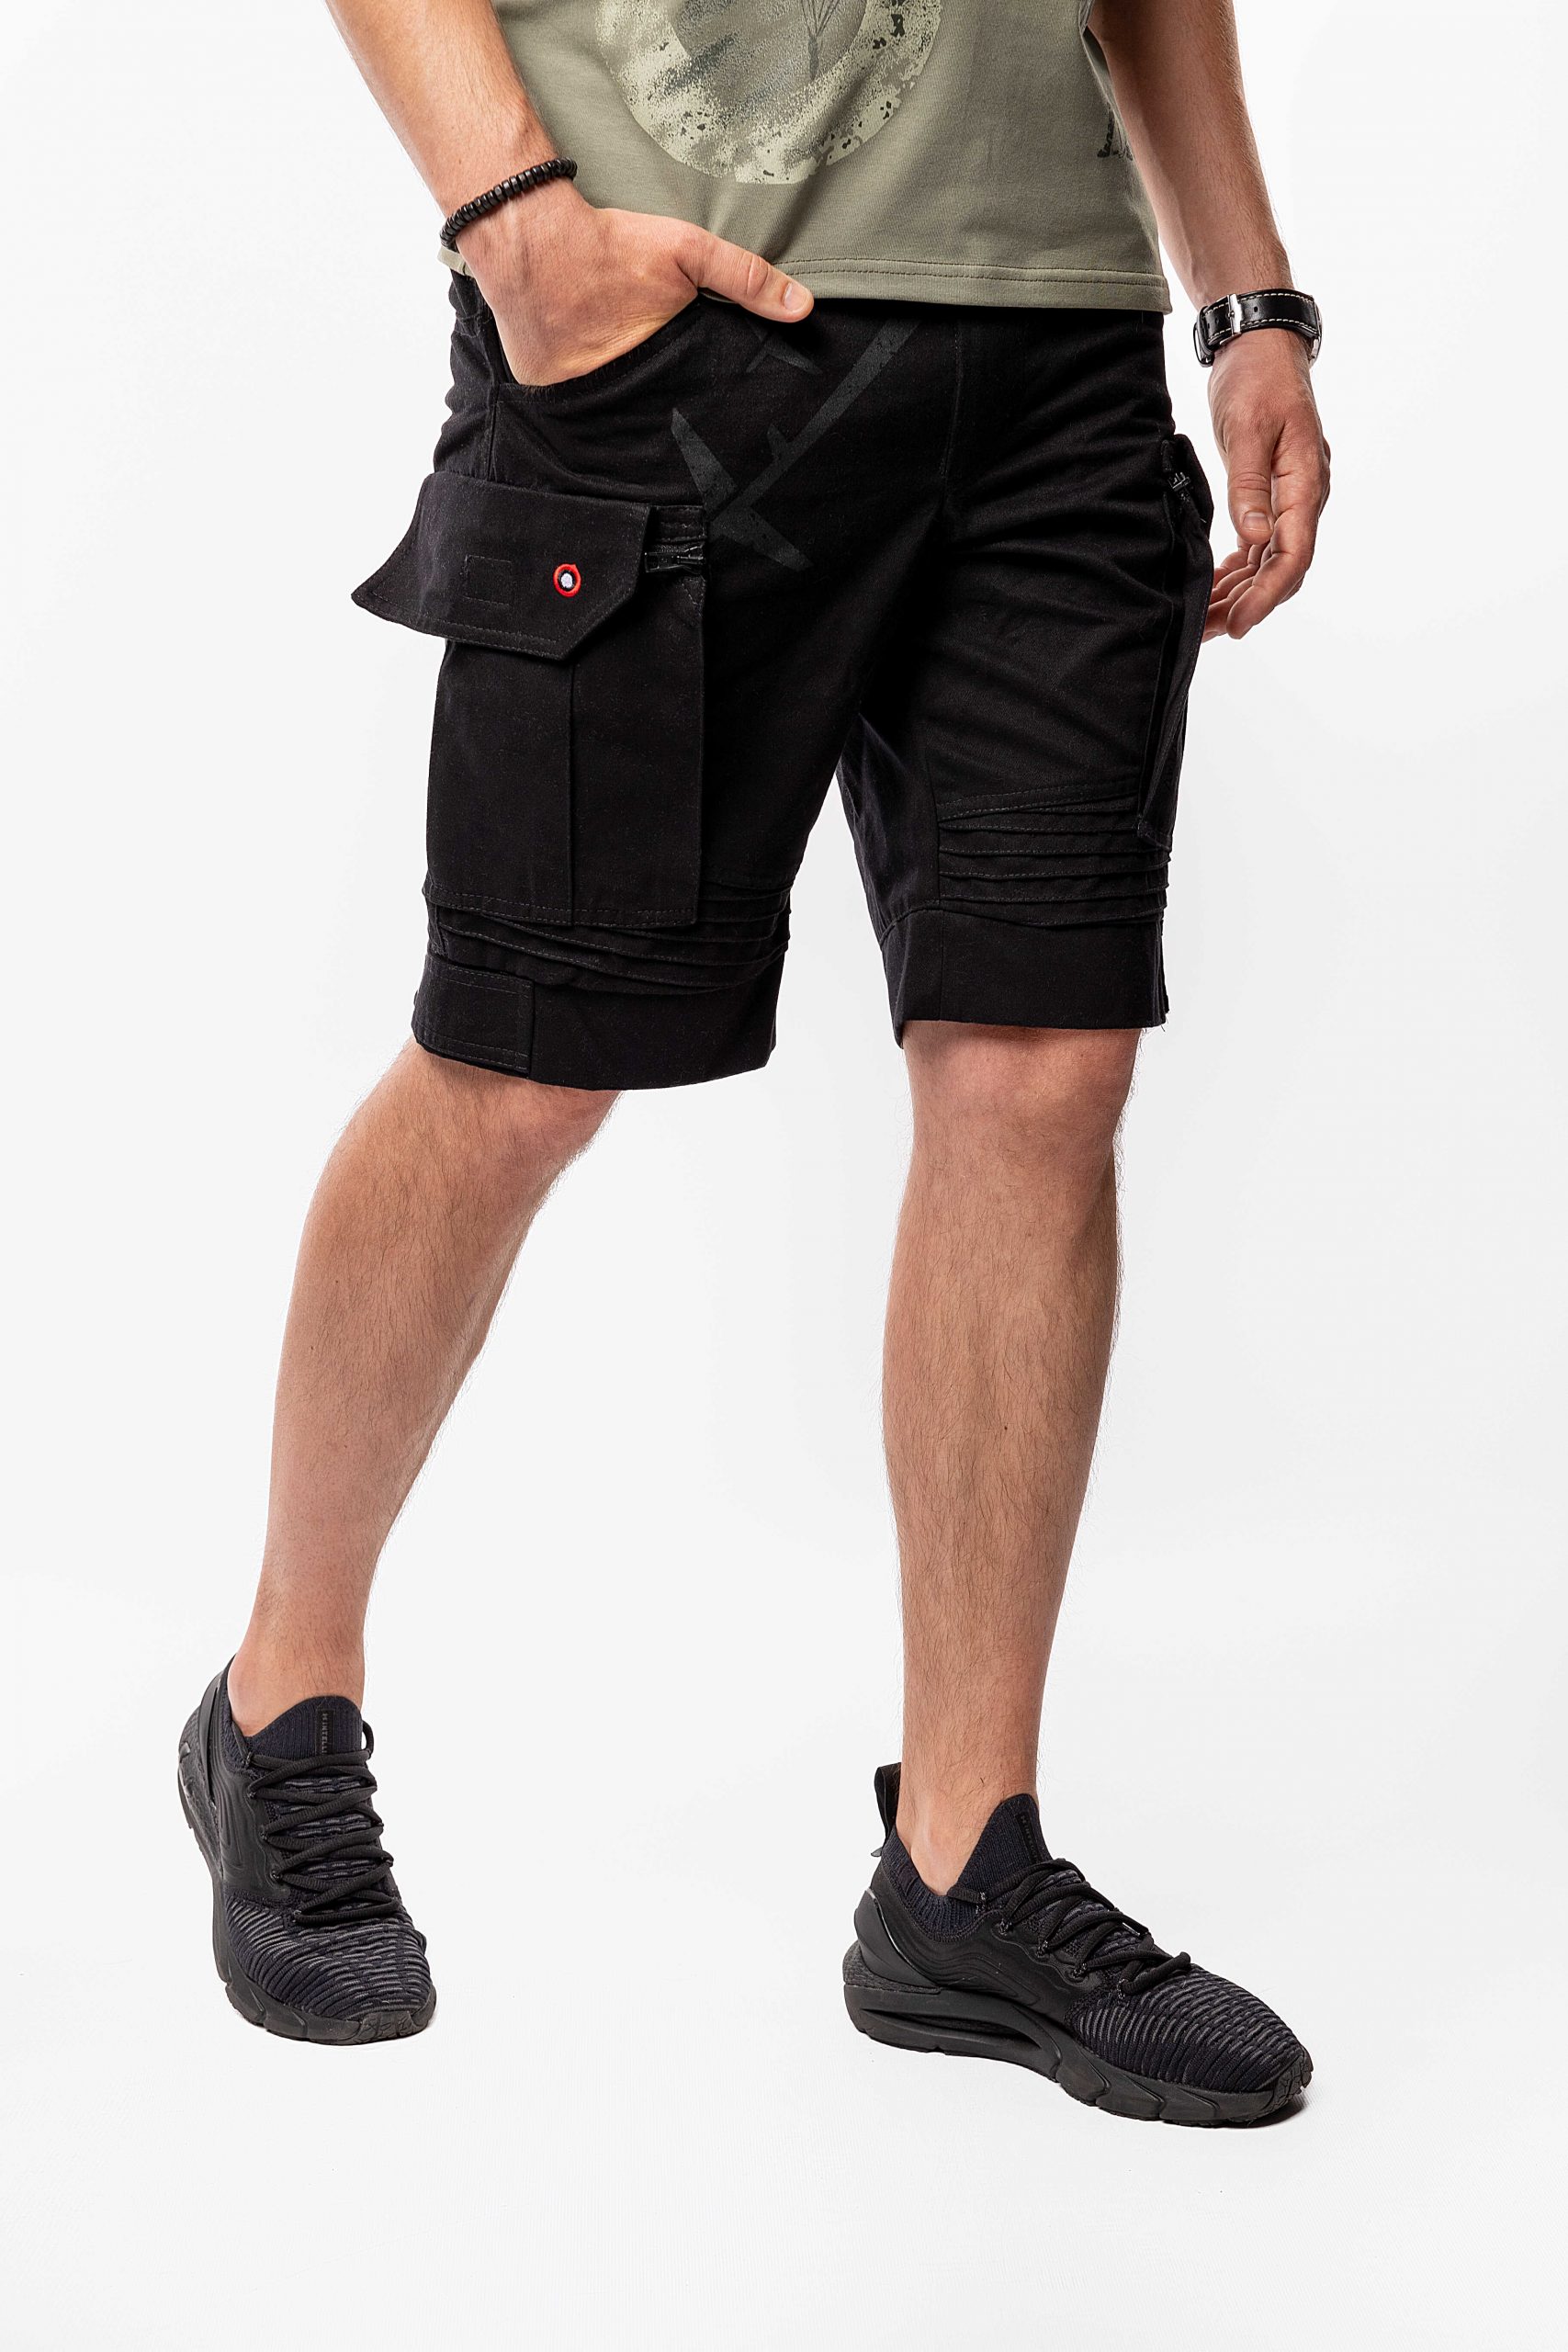 Men's Shorts Flyer. Color black. 2.